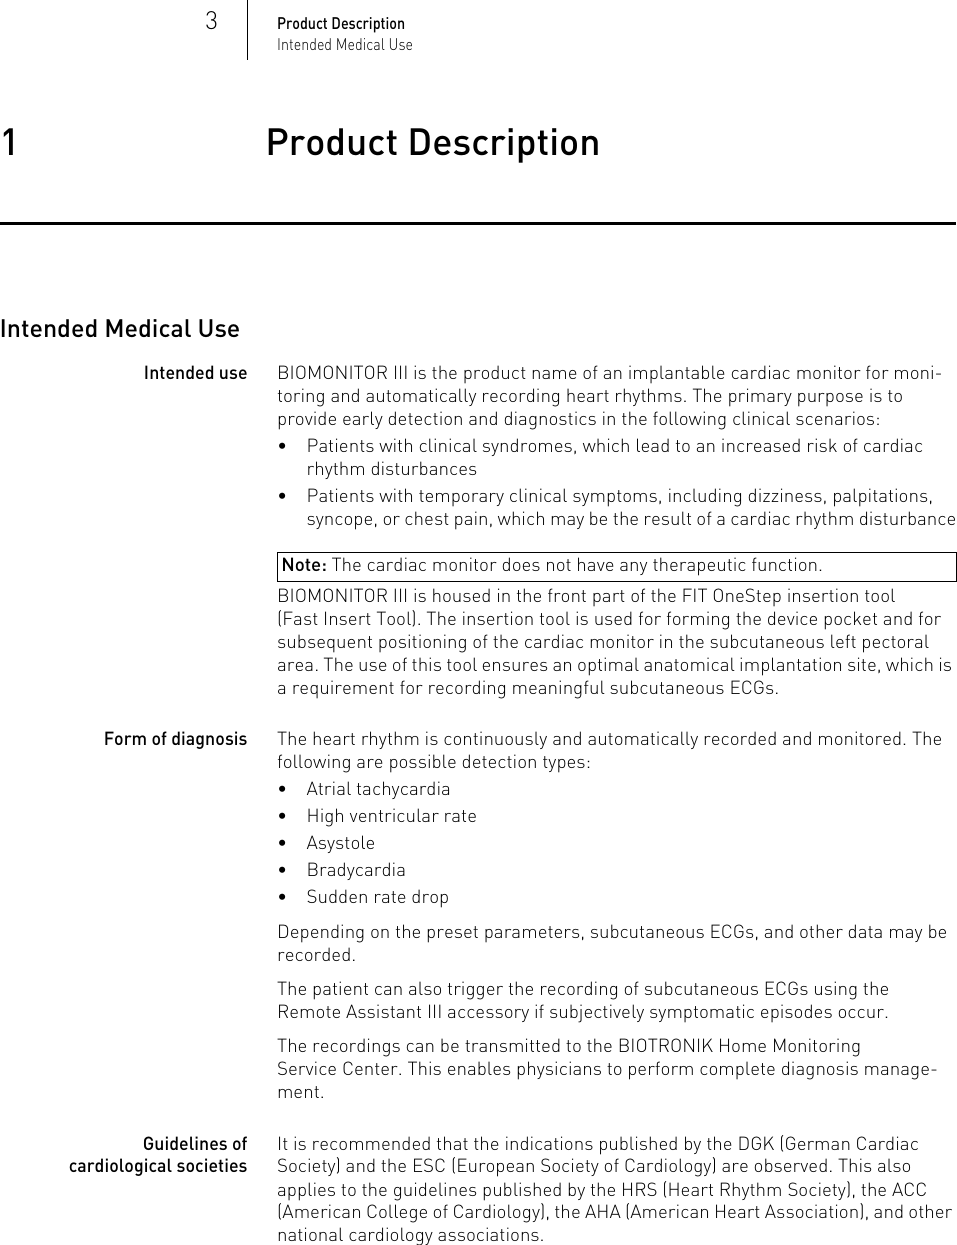 Page 3 of BIOTRONIK SE and KG BM2610 Implantable Cardiac Monitor User Manual P BL 0001136